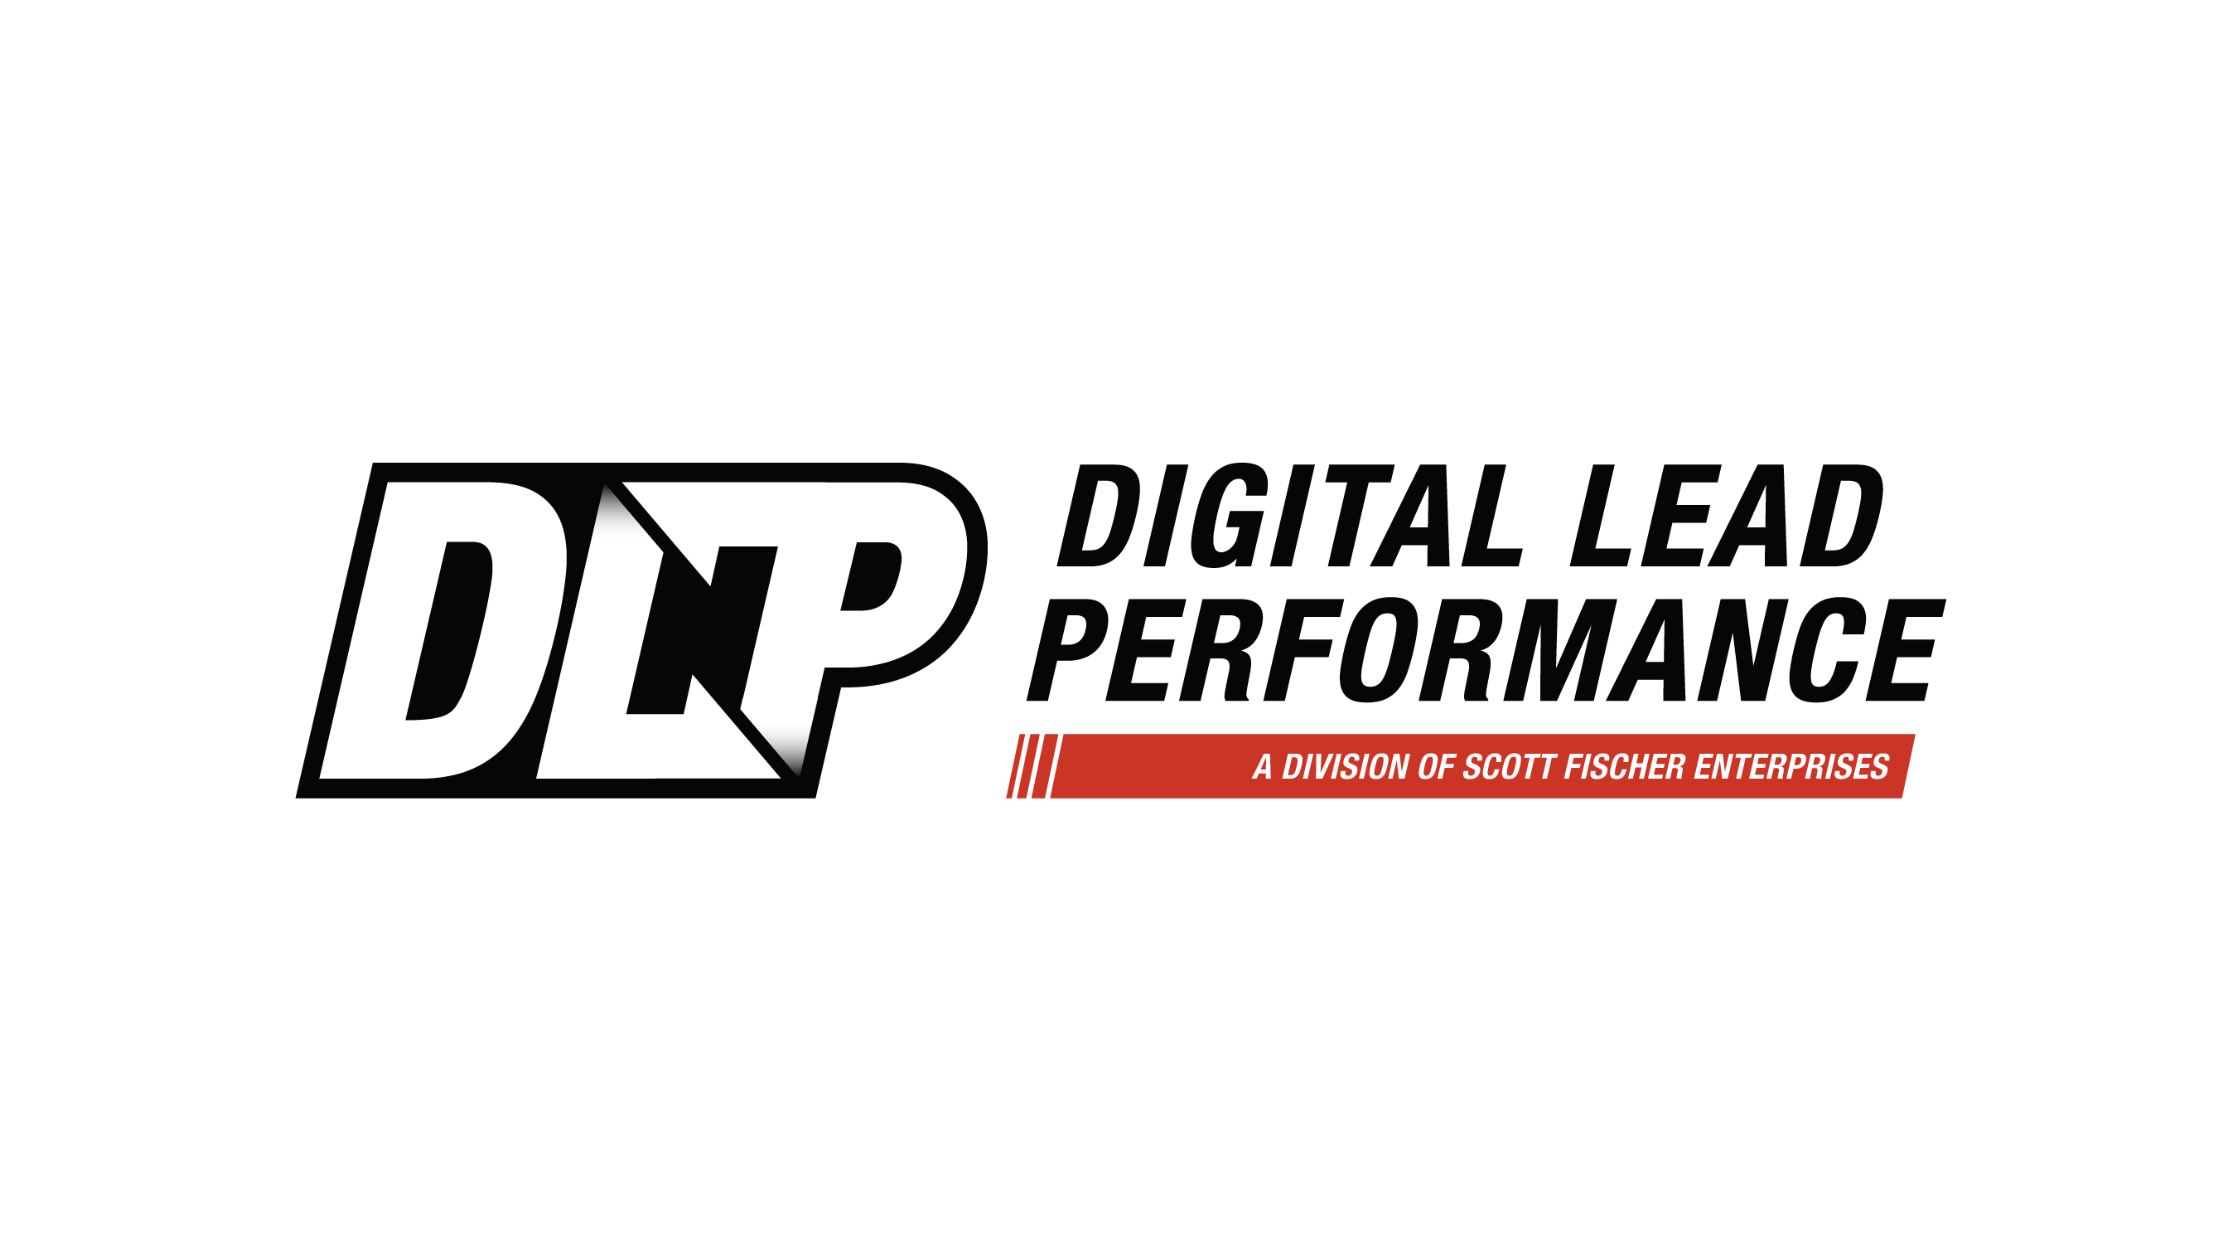 Digital Lead Performance announces partnership with CDK Global